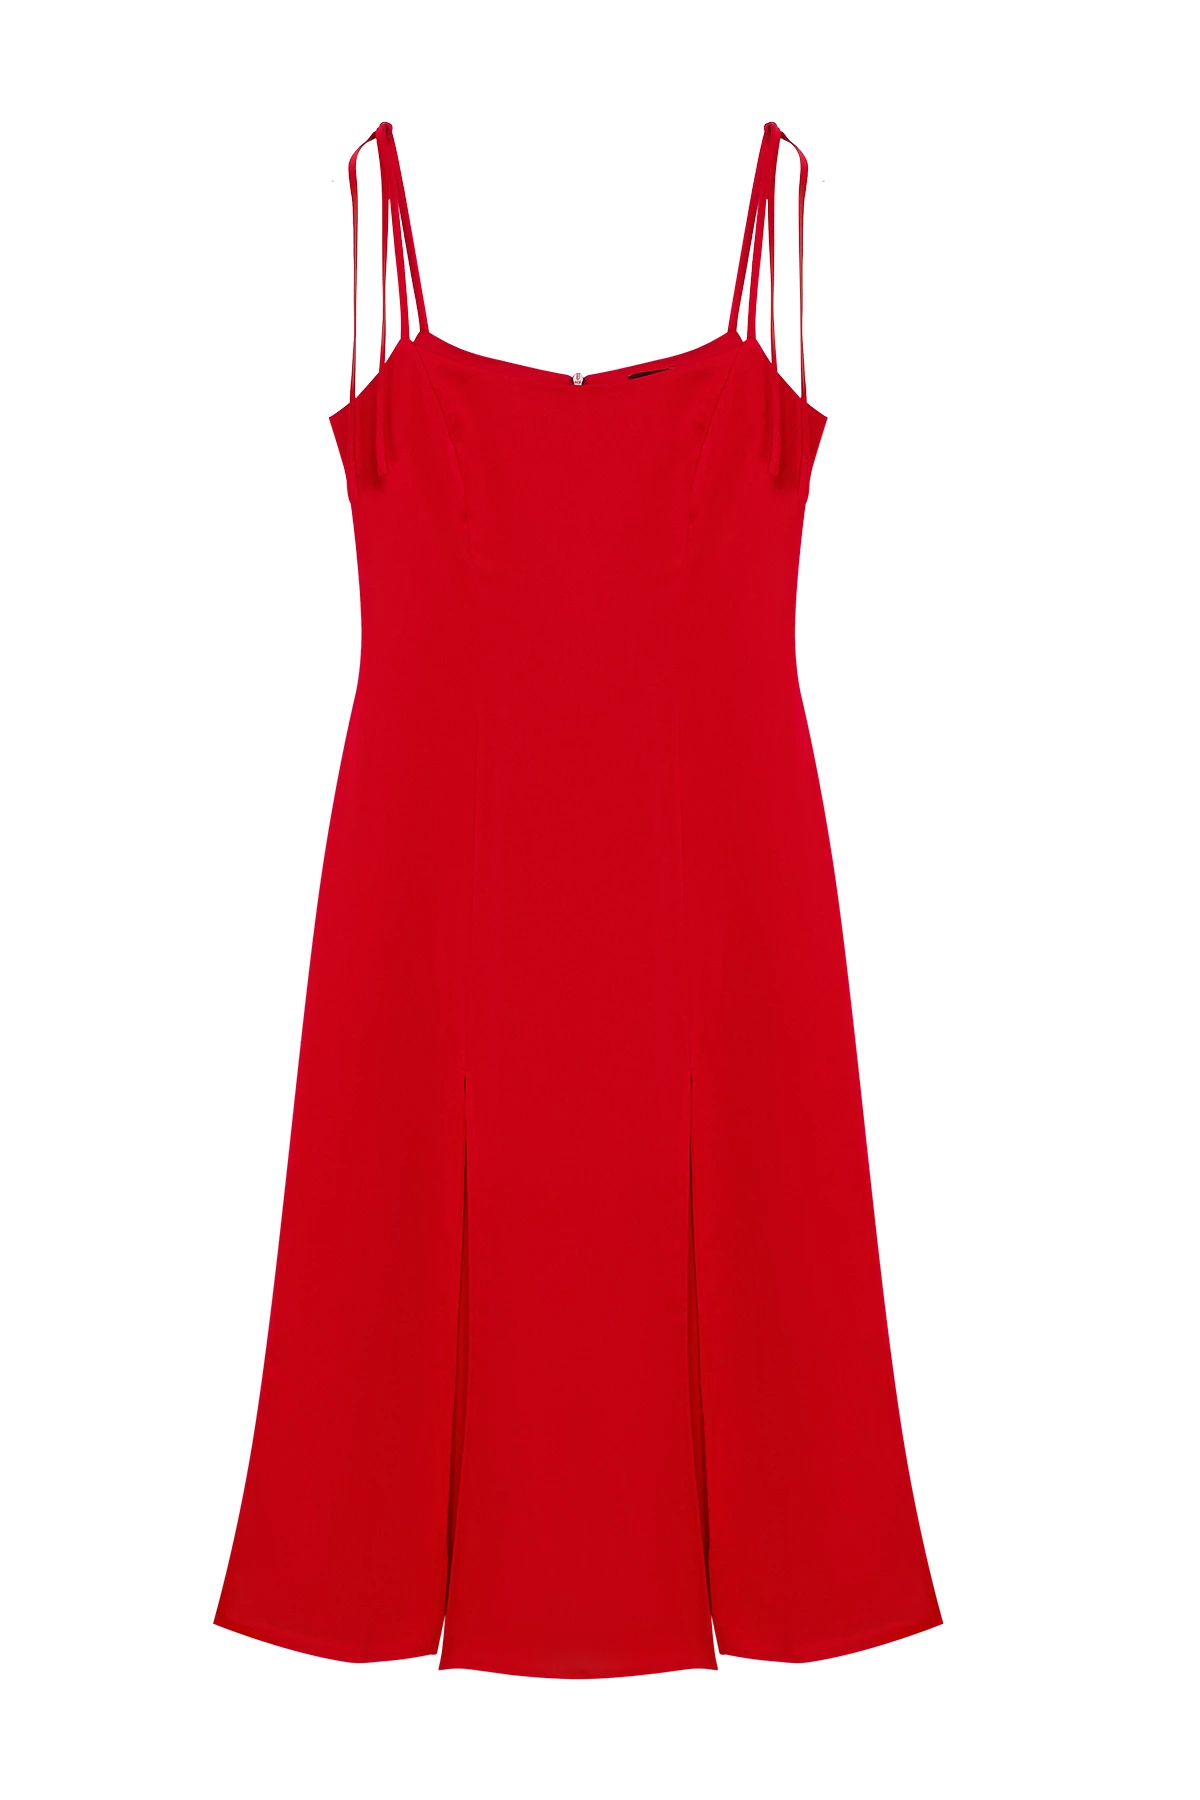 Red satin midi dress with leg slit, photo 5